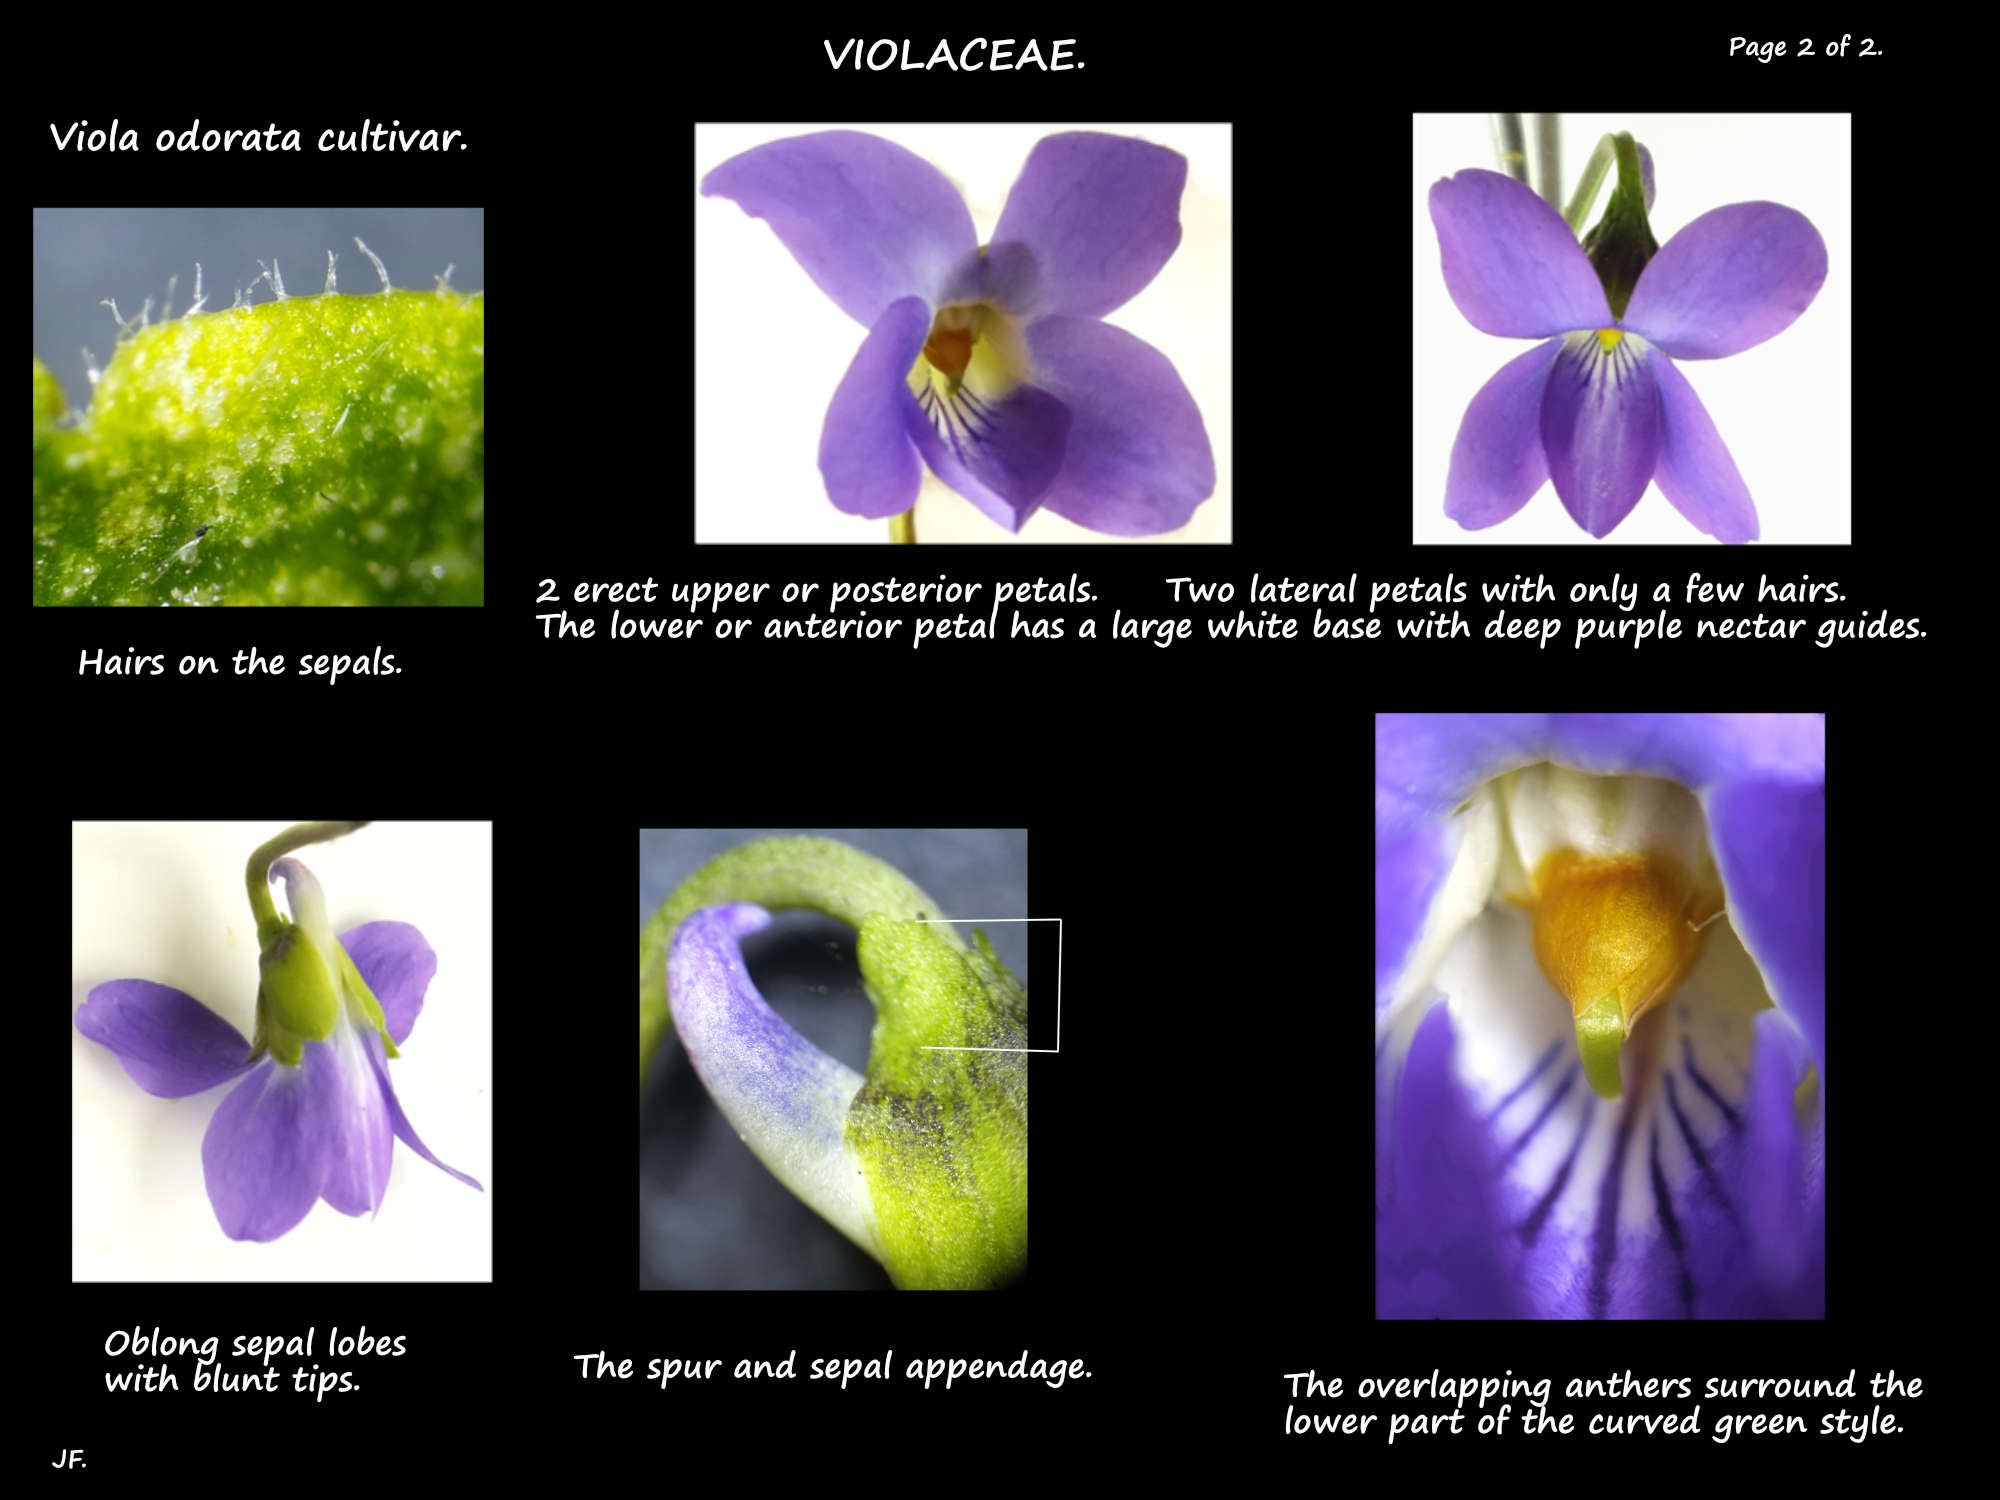 1b Viola odorata cultivar flowers